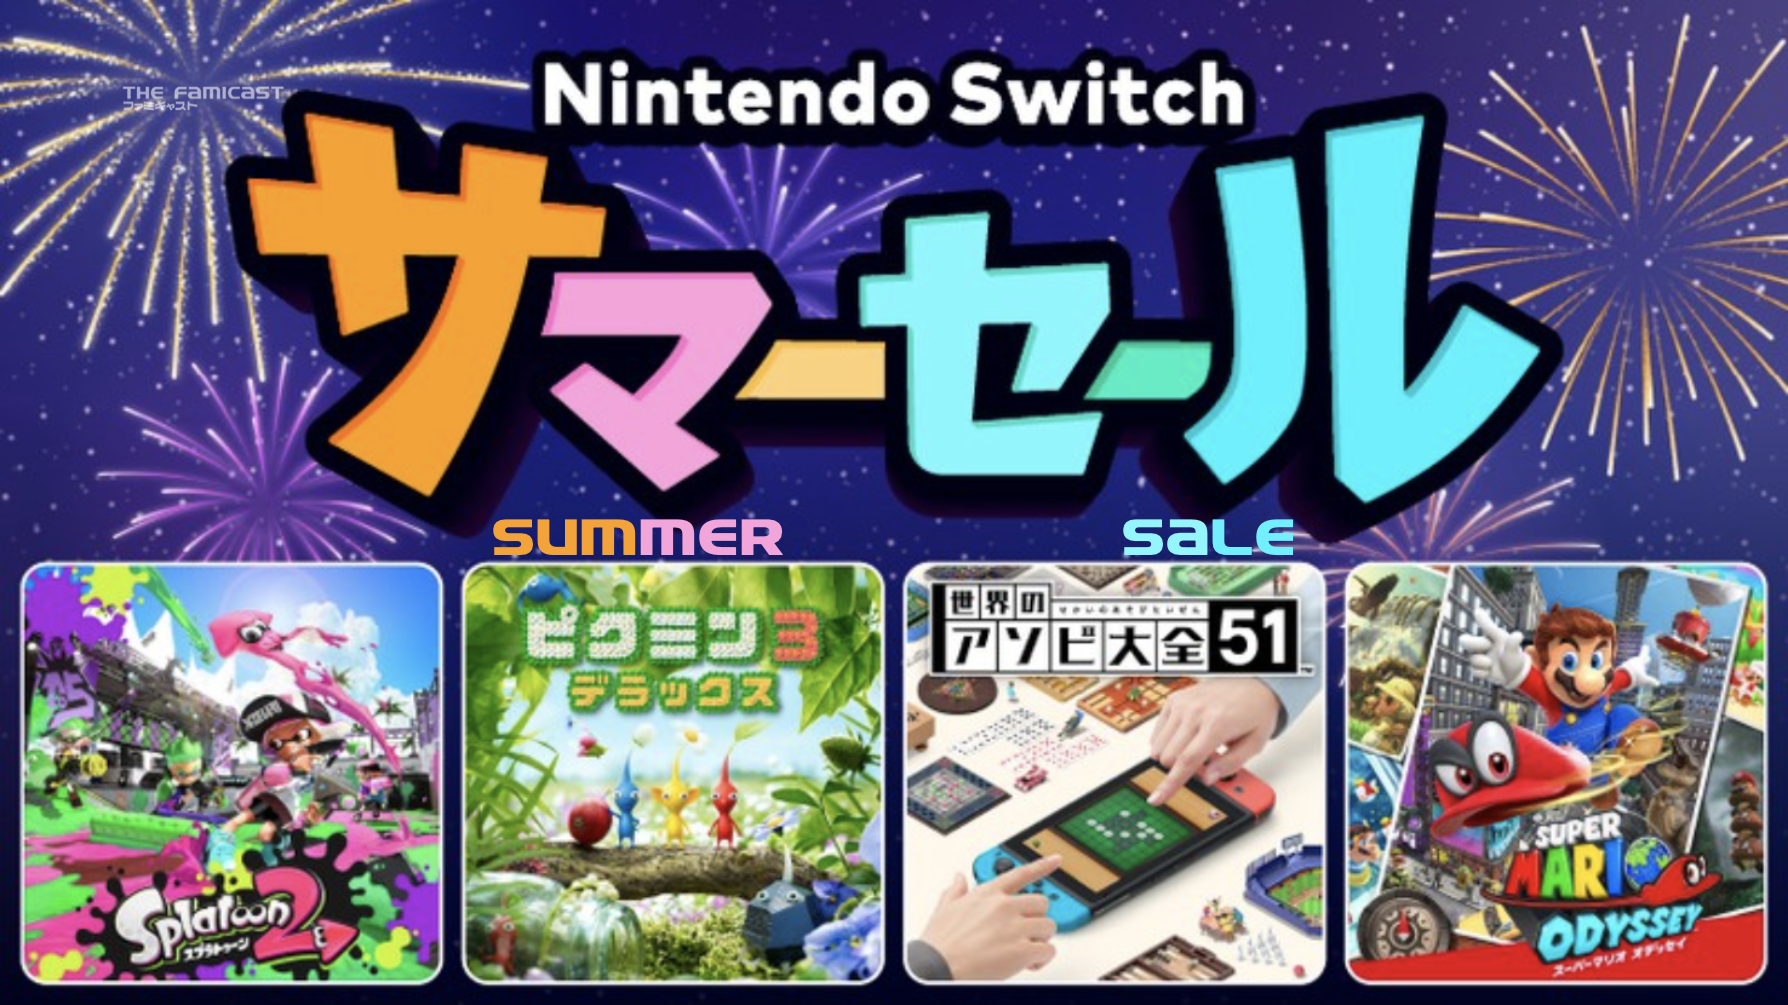 Nintendo Switch Summer Sale in Japan Starts Friday